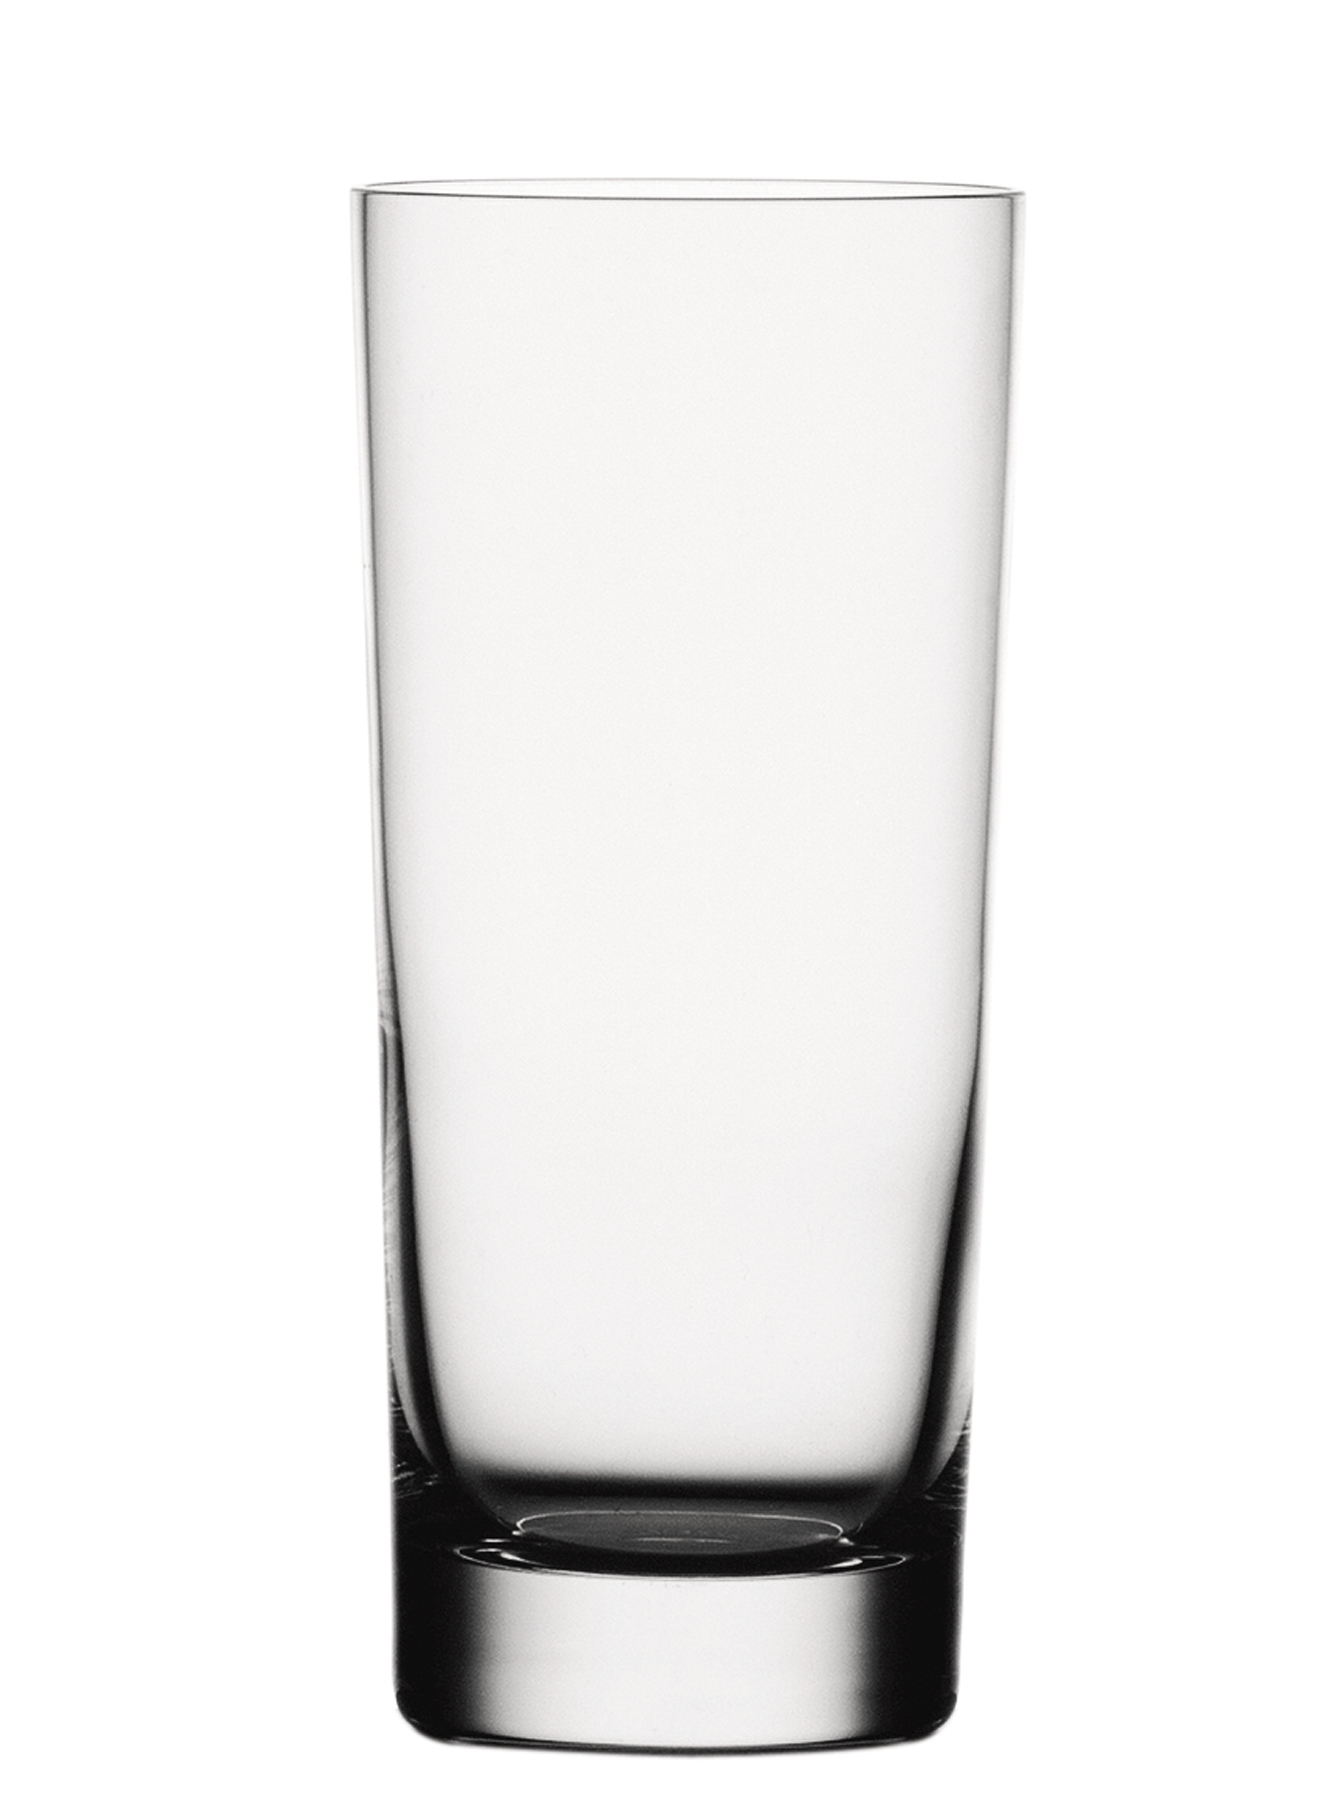 Longdrink glass Classic Bar, Spiegelau - 360ml (1 pc.)